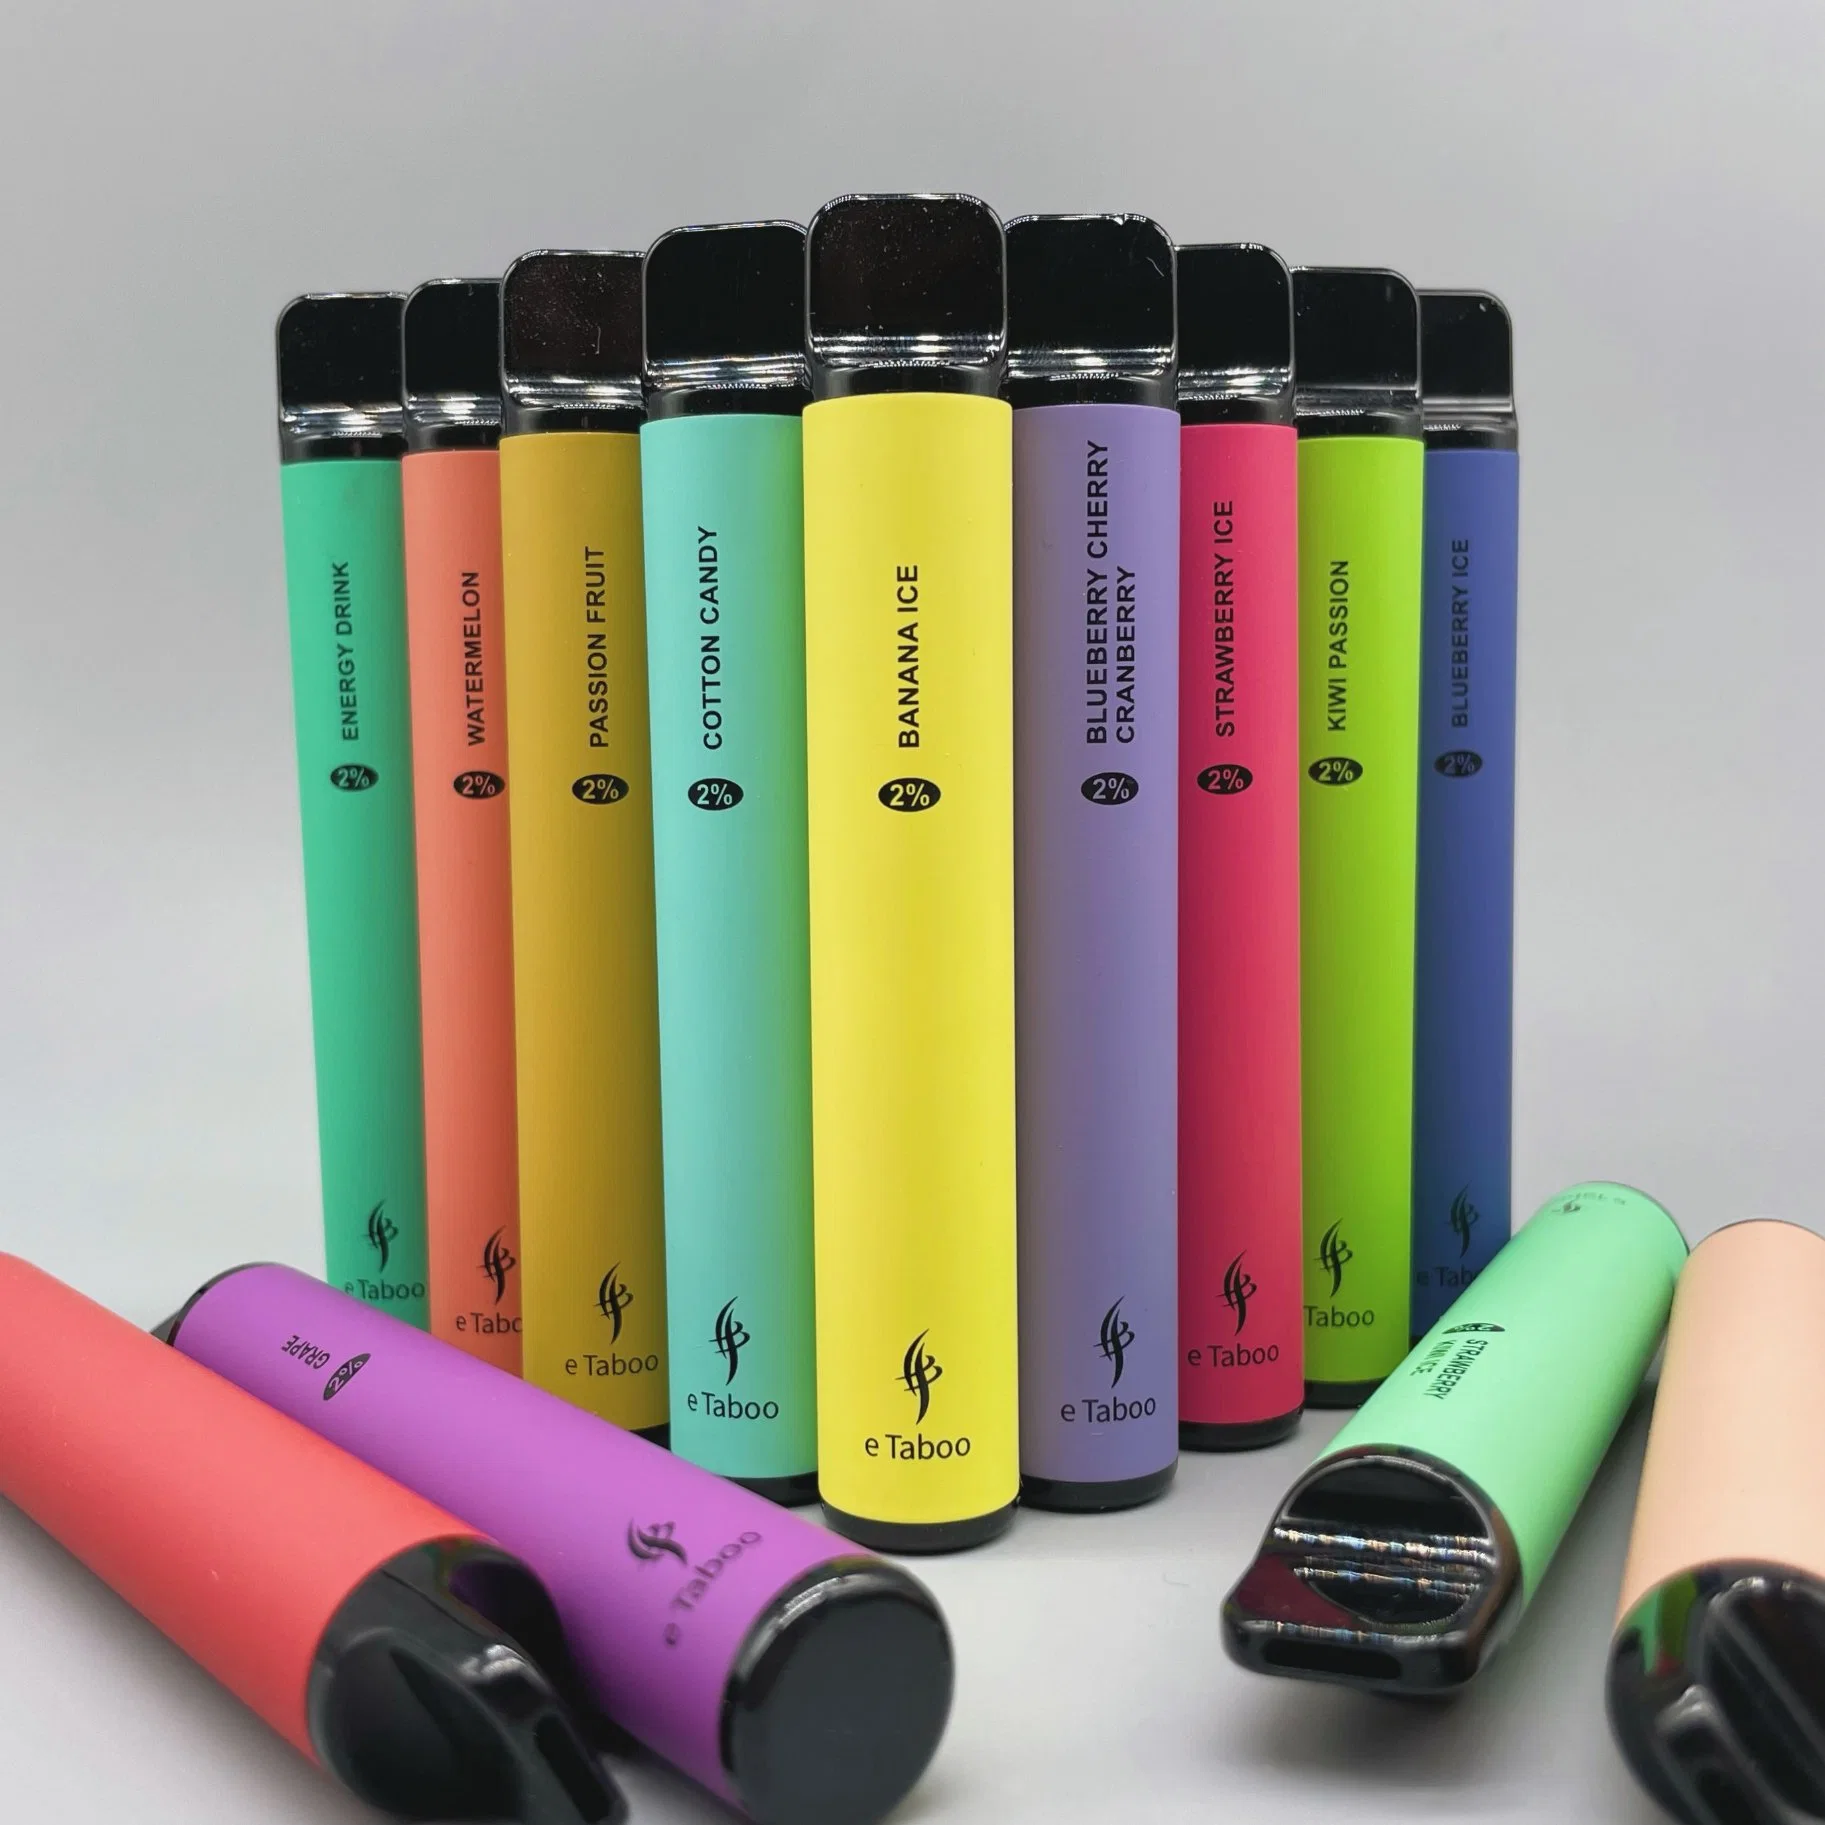 UK Euro Hot Sale Factory Wholesale E Taboo Basic Disposable E-Cigarette Vaporizer Vape Device Mod Pod System Cheap